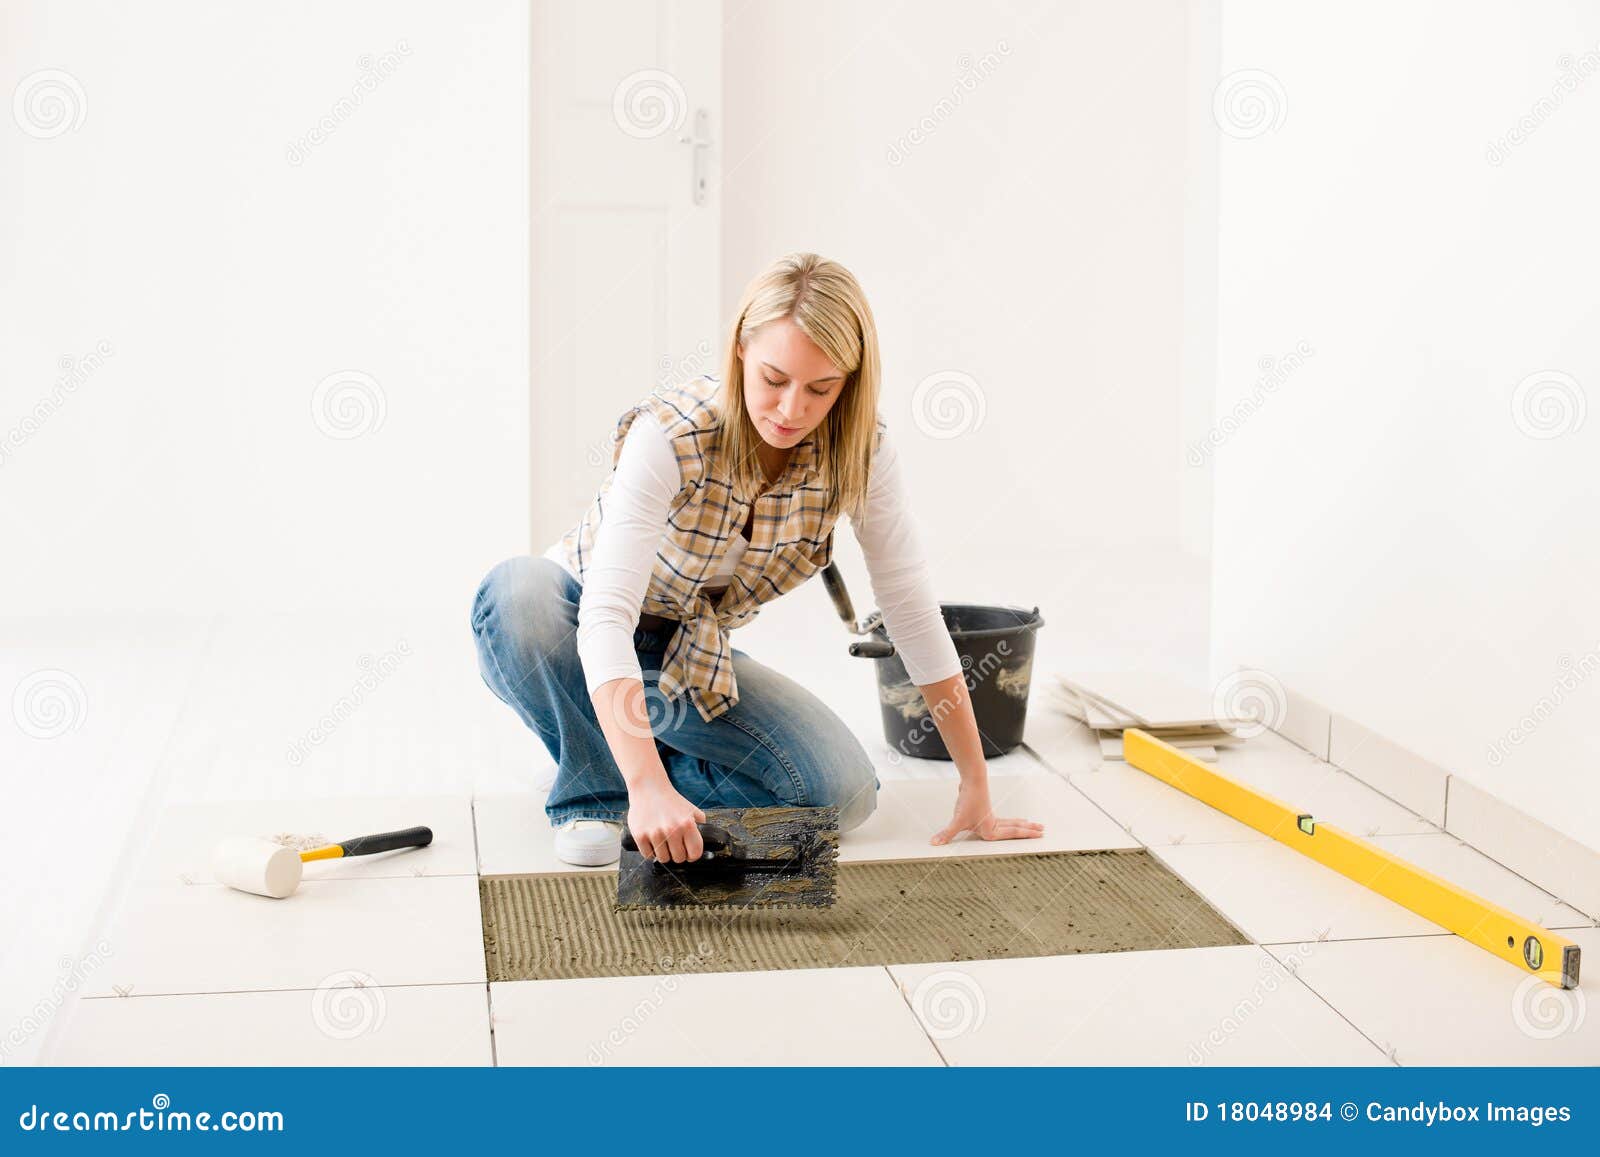 home improvement - handywoman laying tile